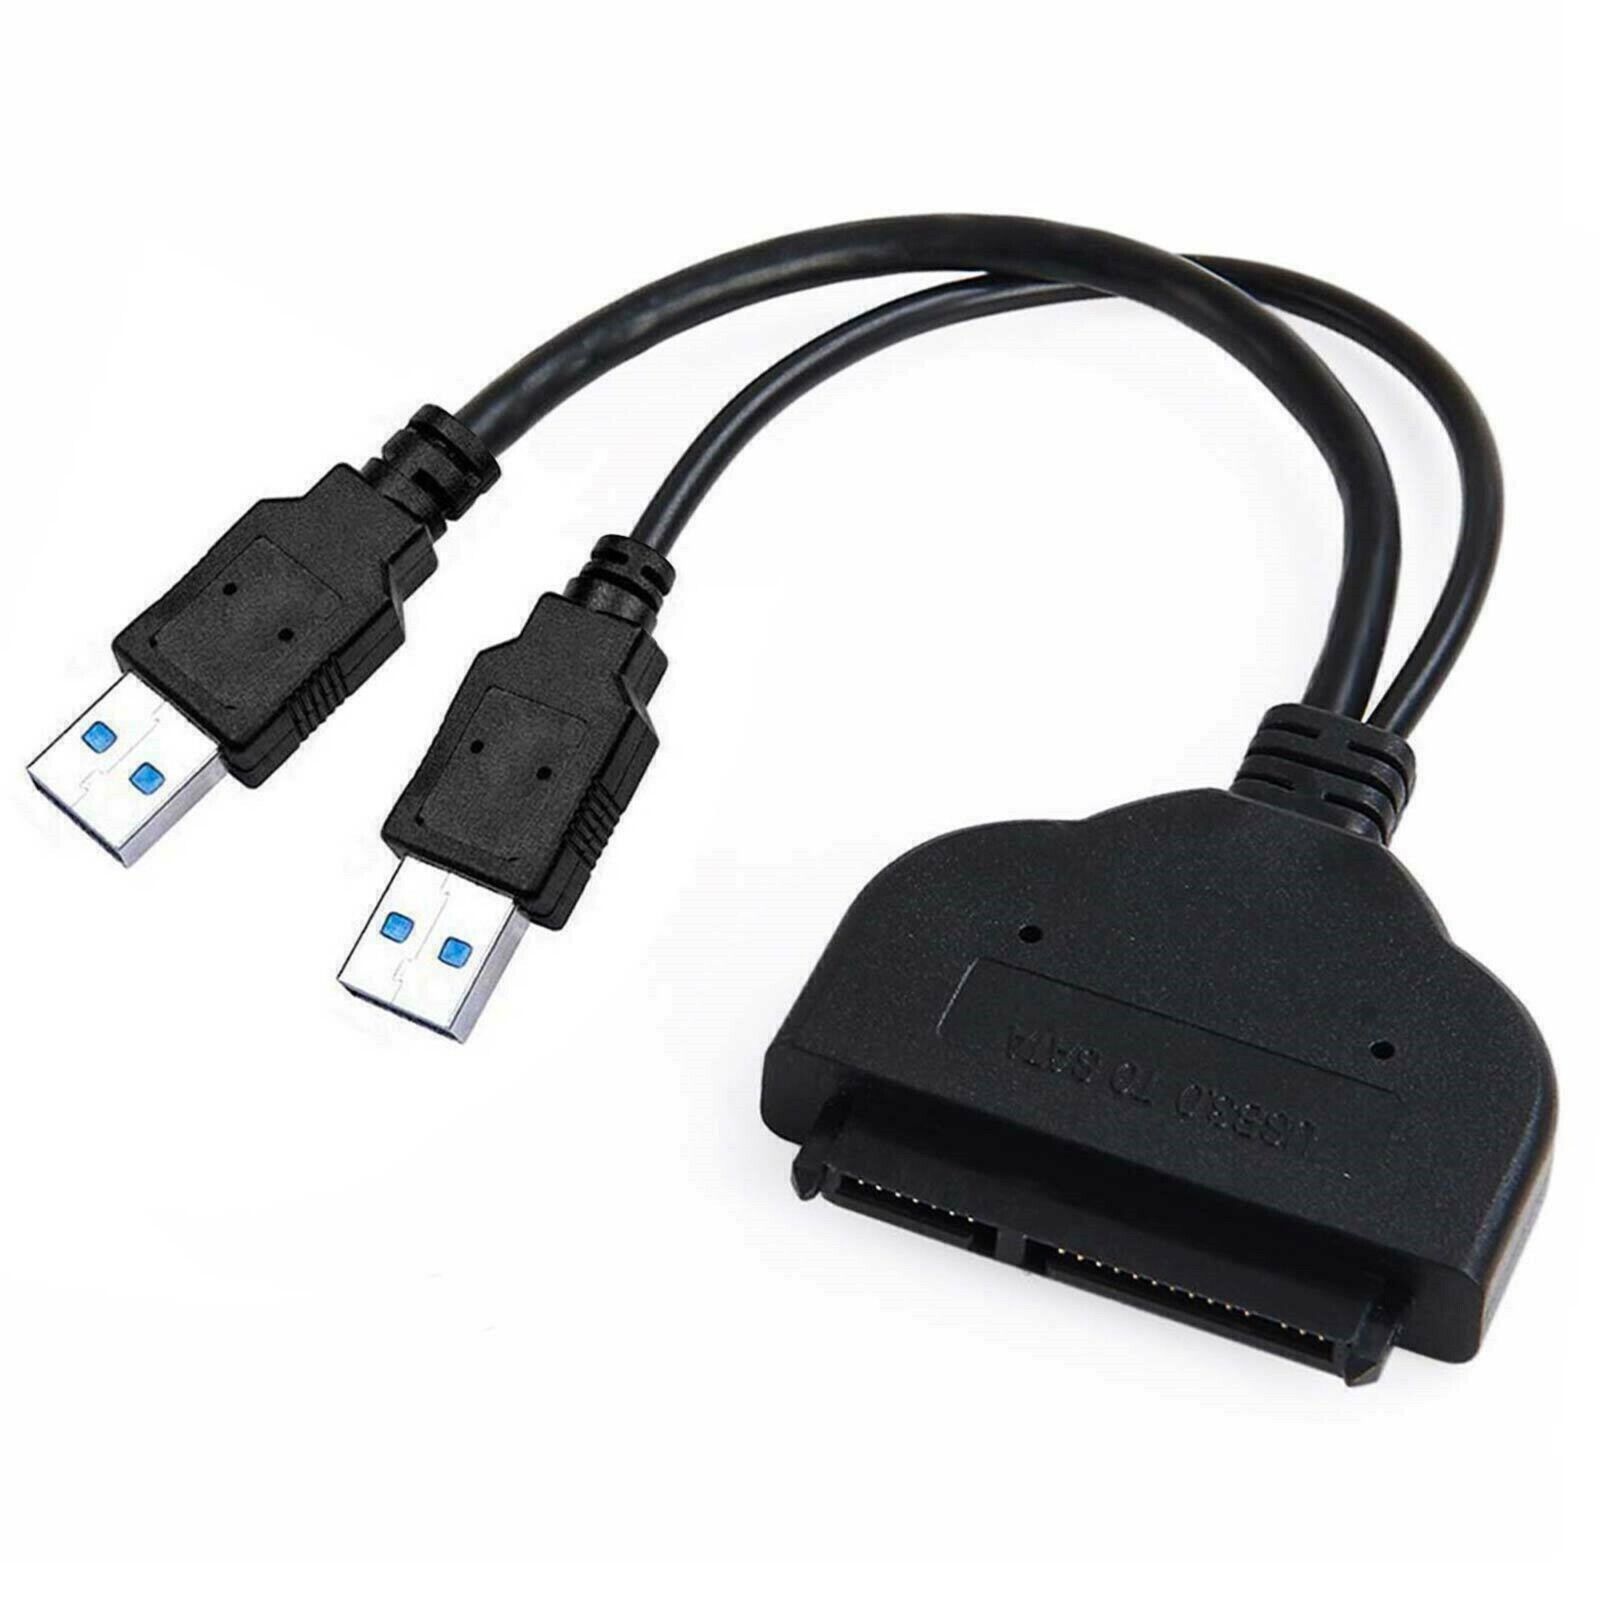 Universal USB 3.0 IDE/SATA Converter External Hard Drive Adapter Tool Kit -  Contrado Digital